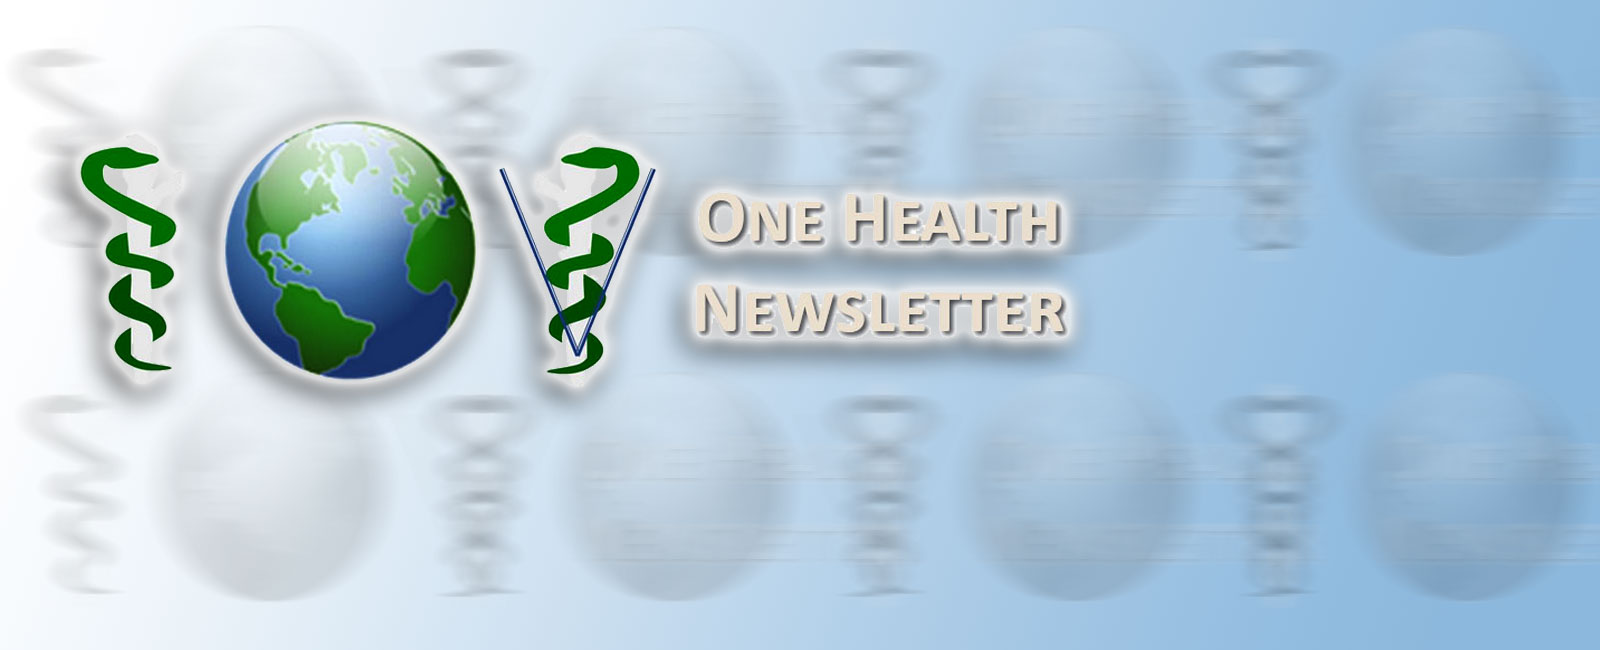 One Health Newsletter (OHNL)